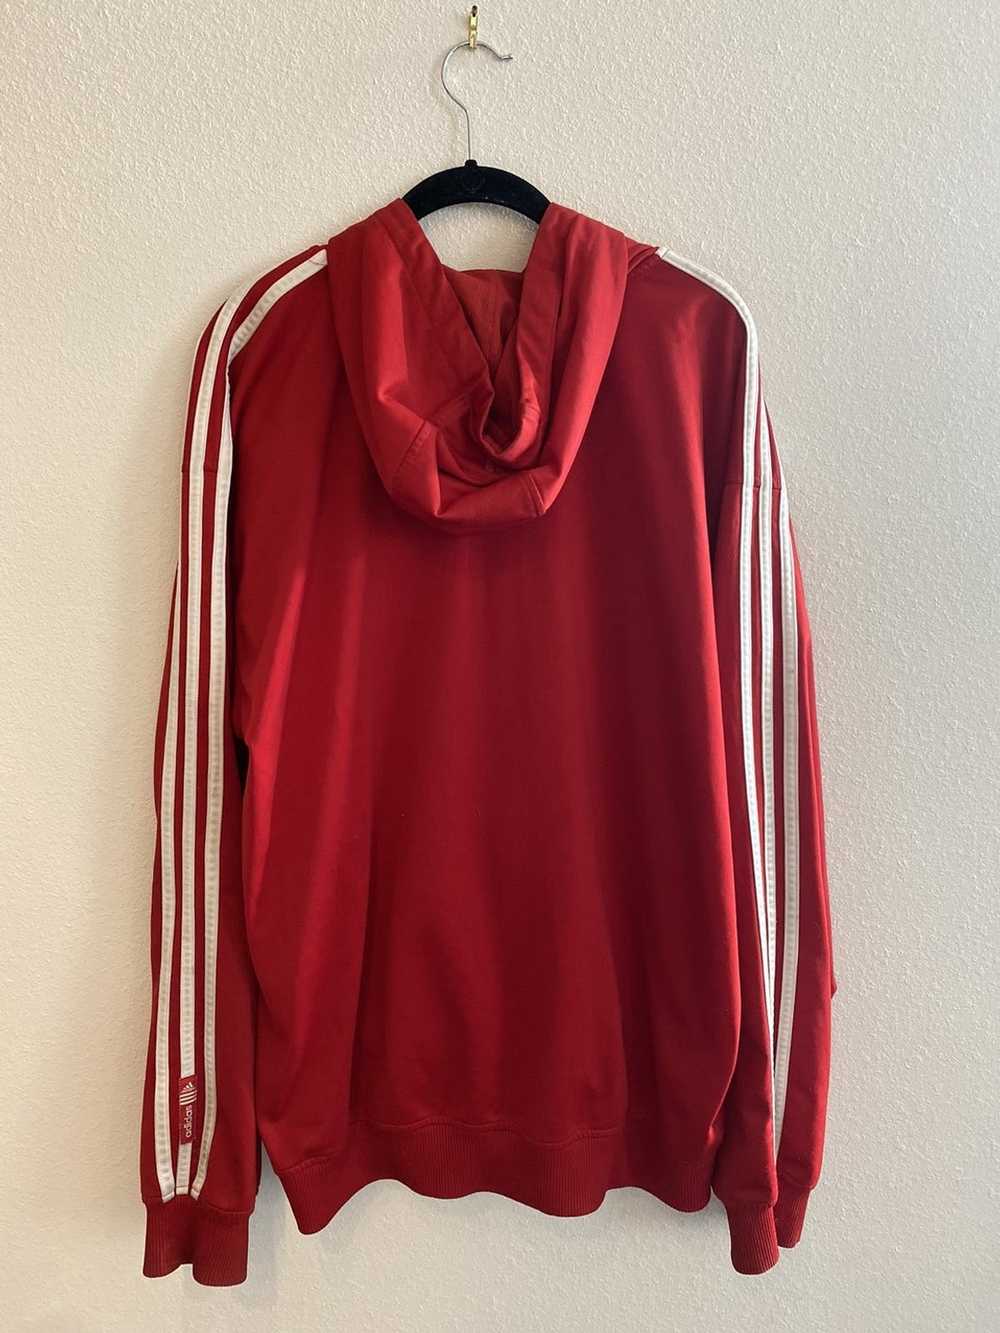 Adidas Red/white 3 Stripe Zip up Hoodie - image 2